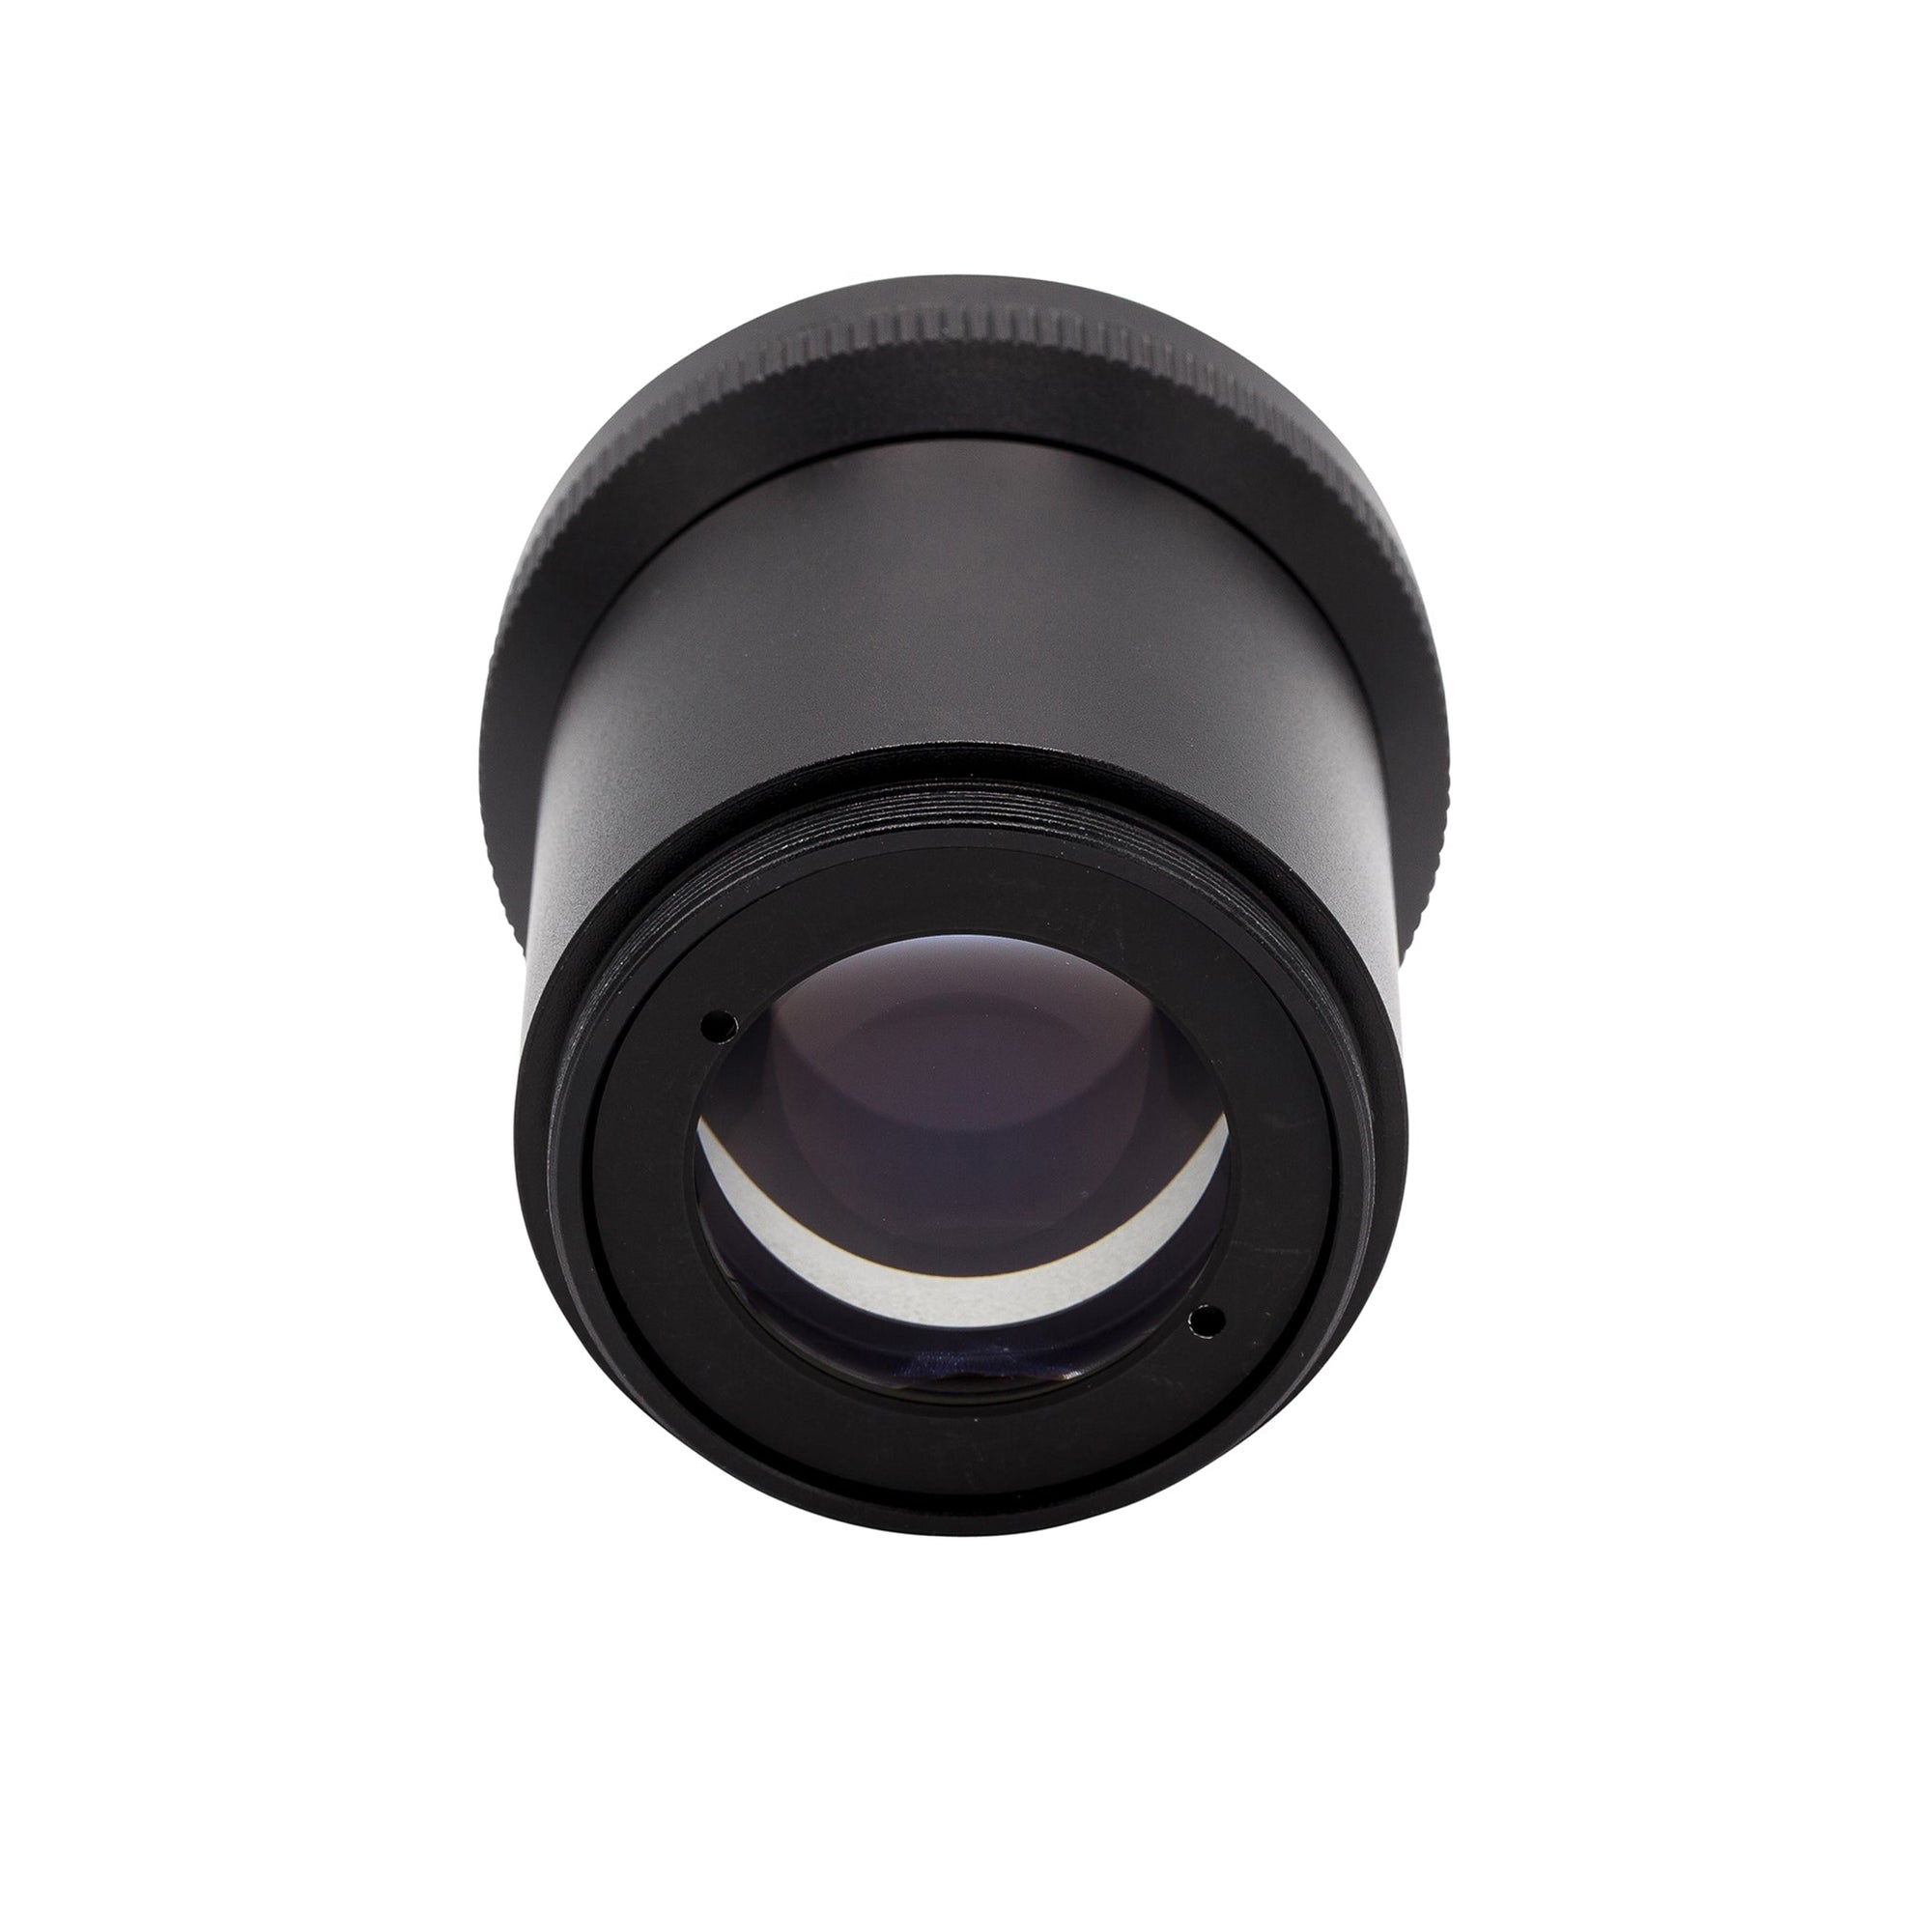 Strobepro 50mm Lens for Optical Snoot II